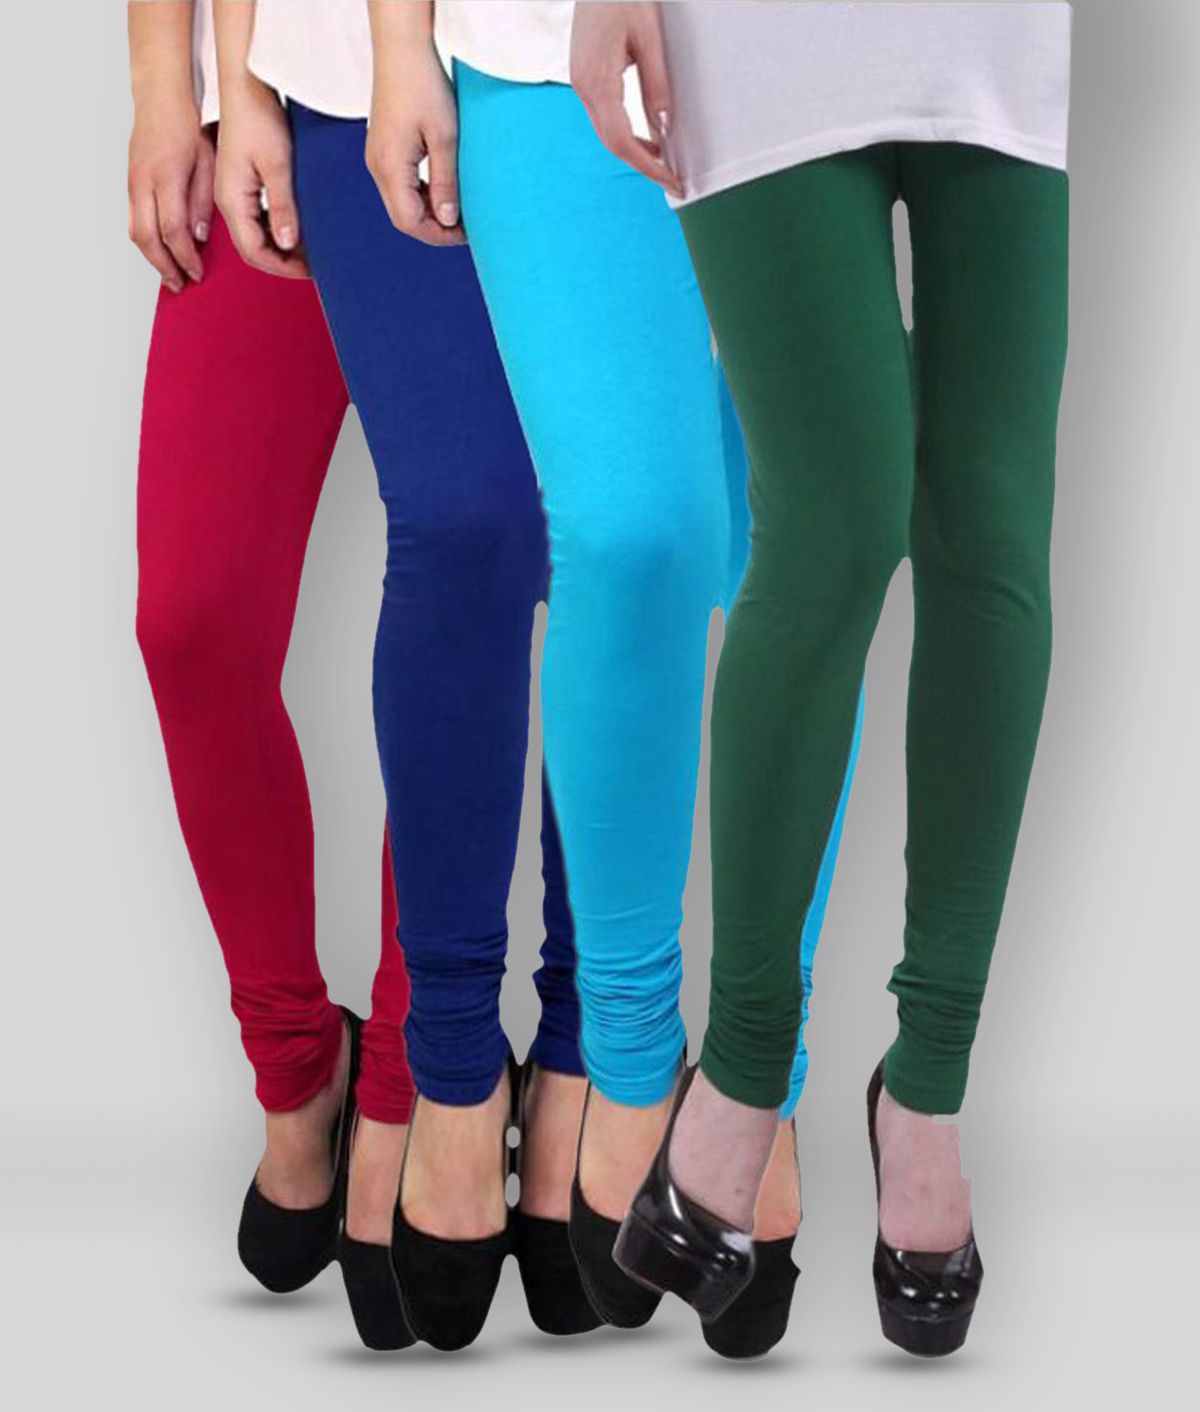     			FnMe - Multicolor Cotton Blend Women's Leggings ( Pack of 4 )